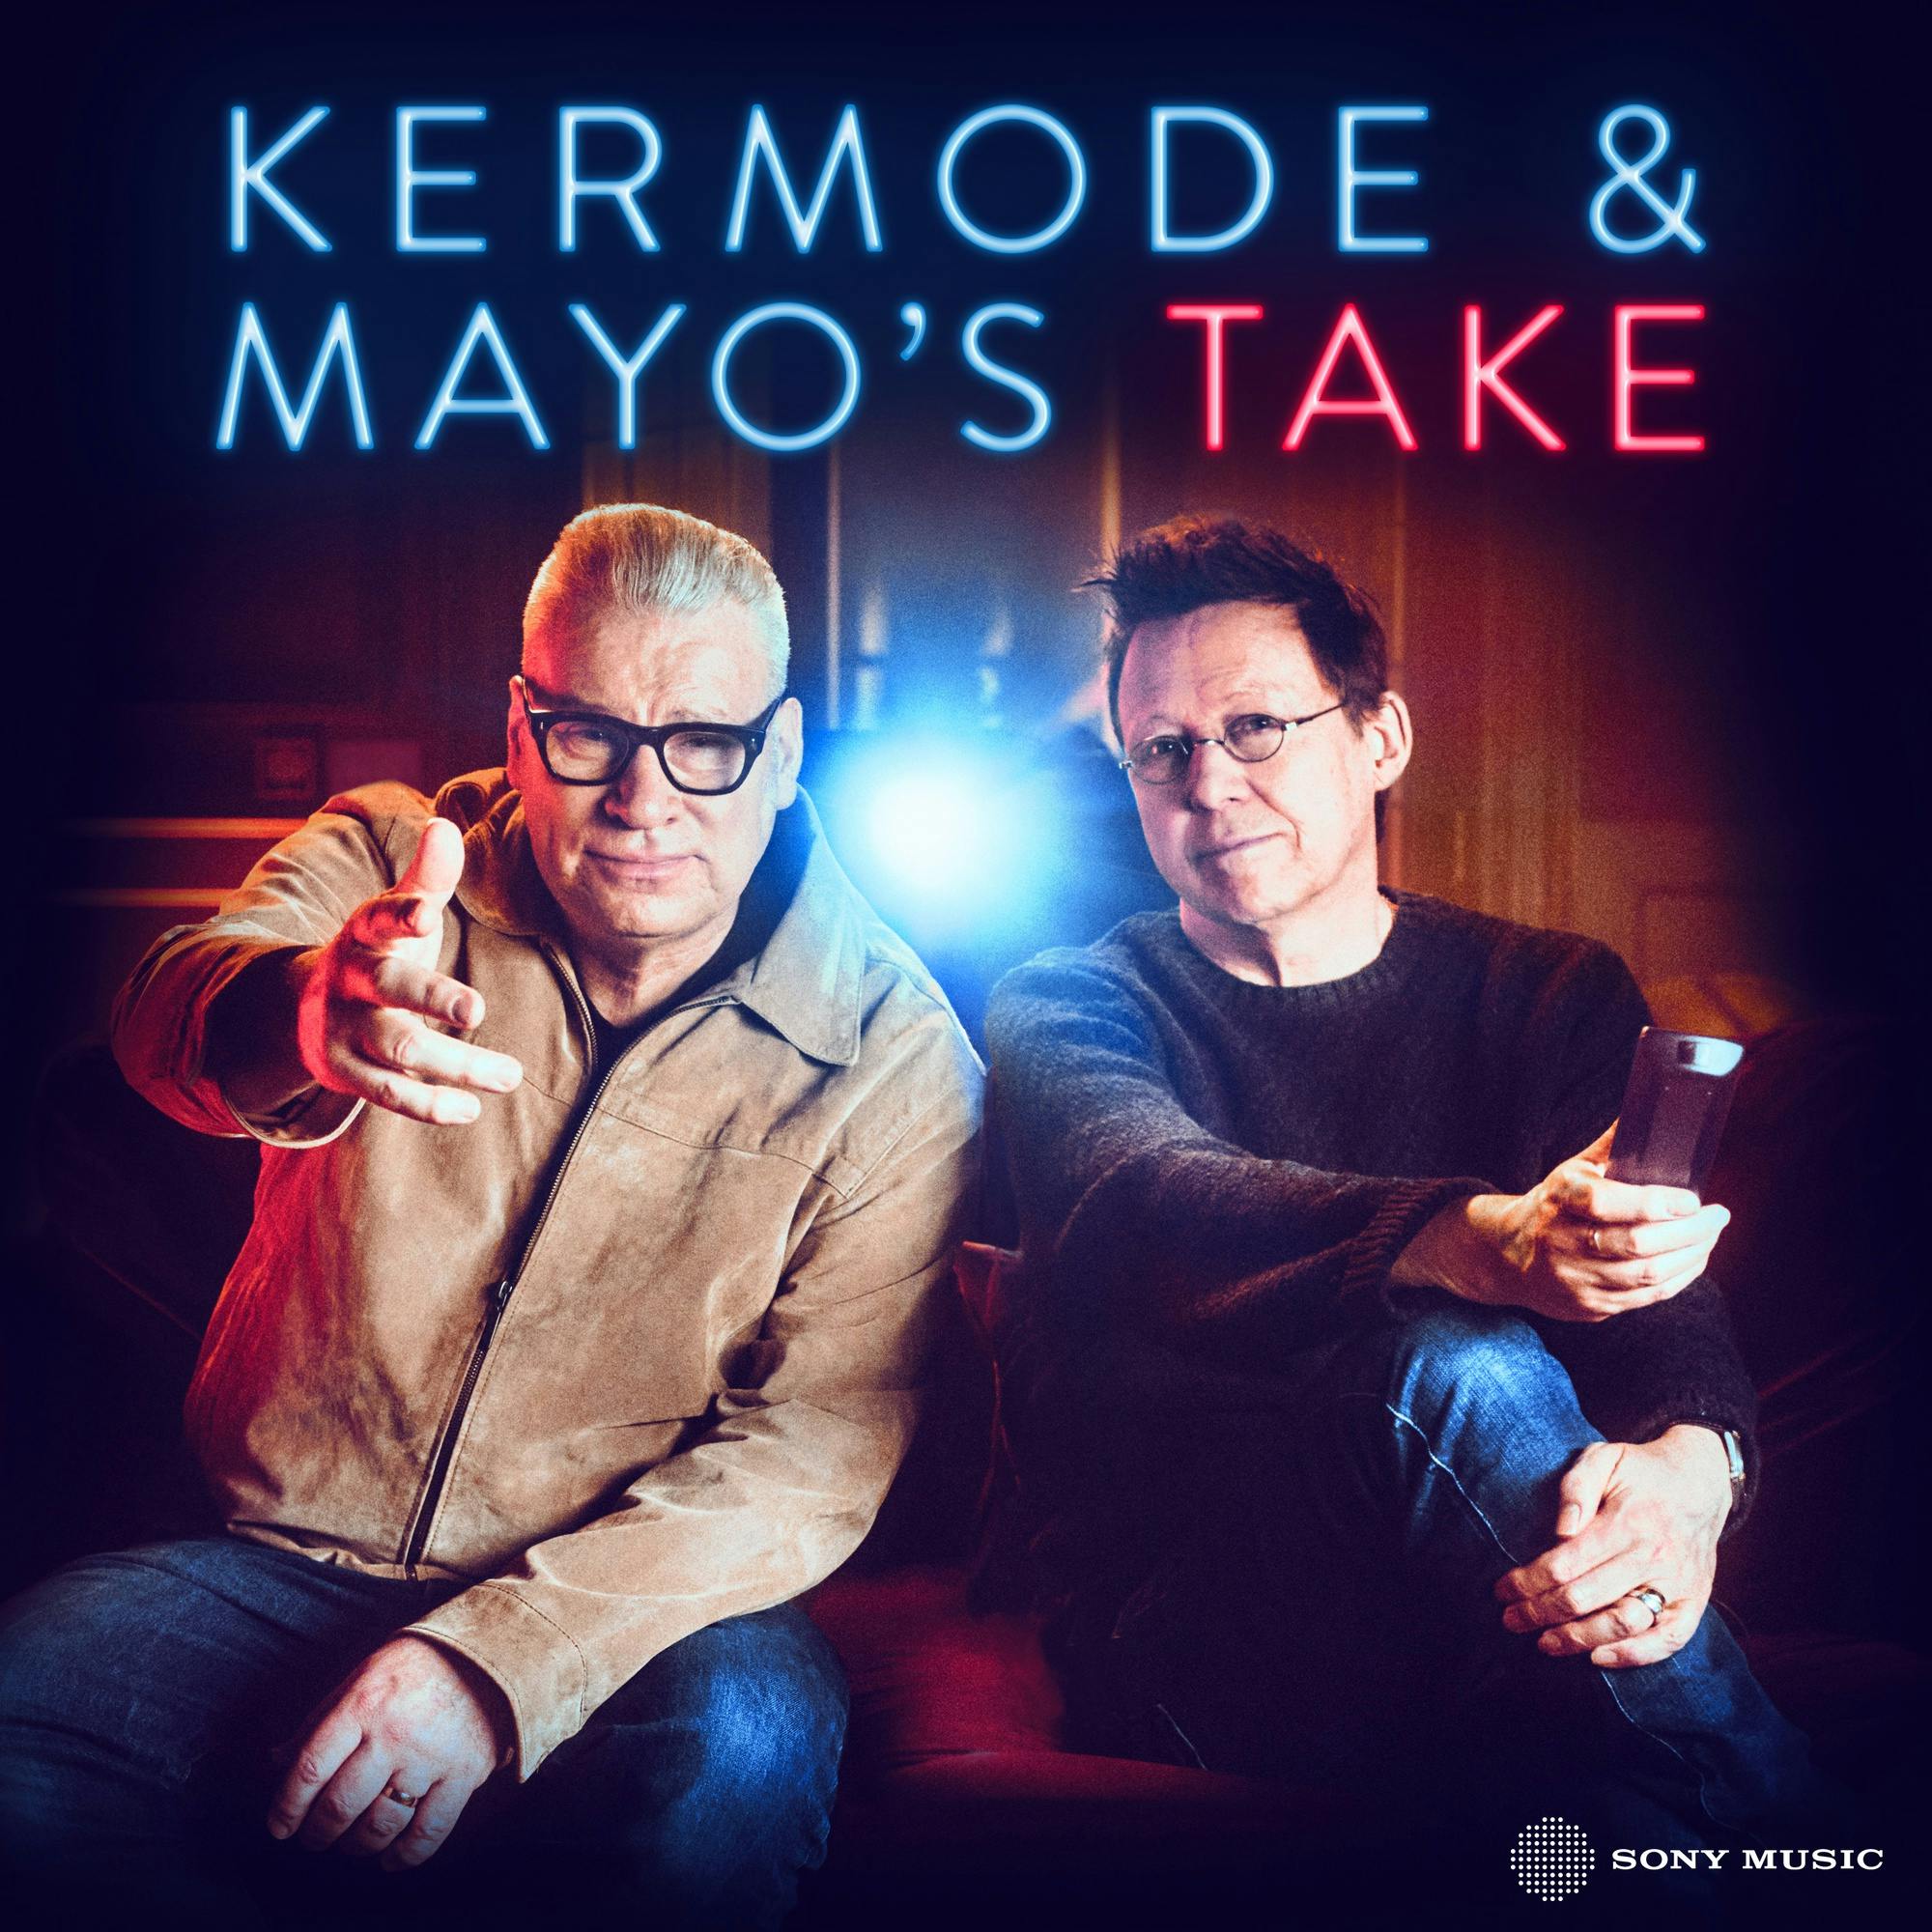 Kermode & Mayo’s Take podcast show image